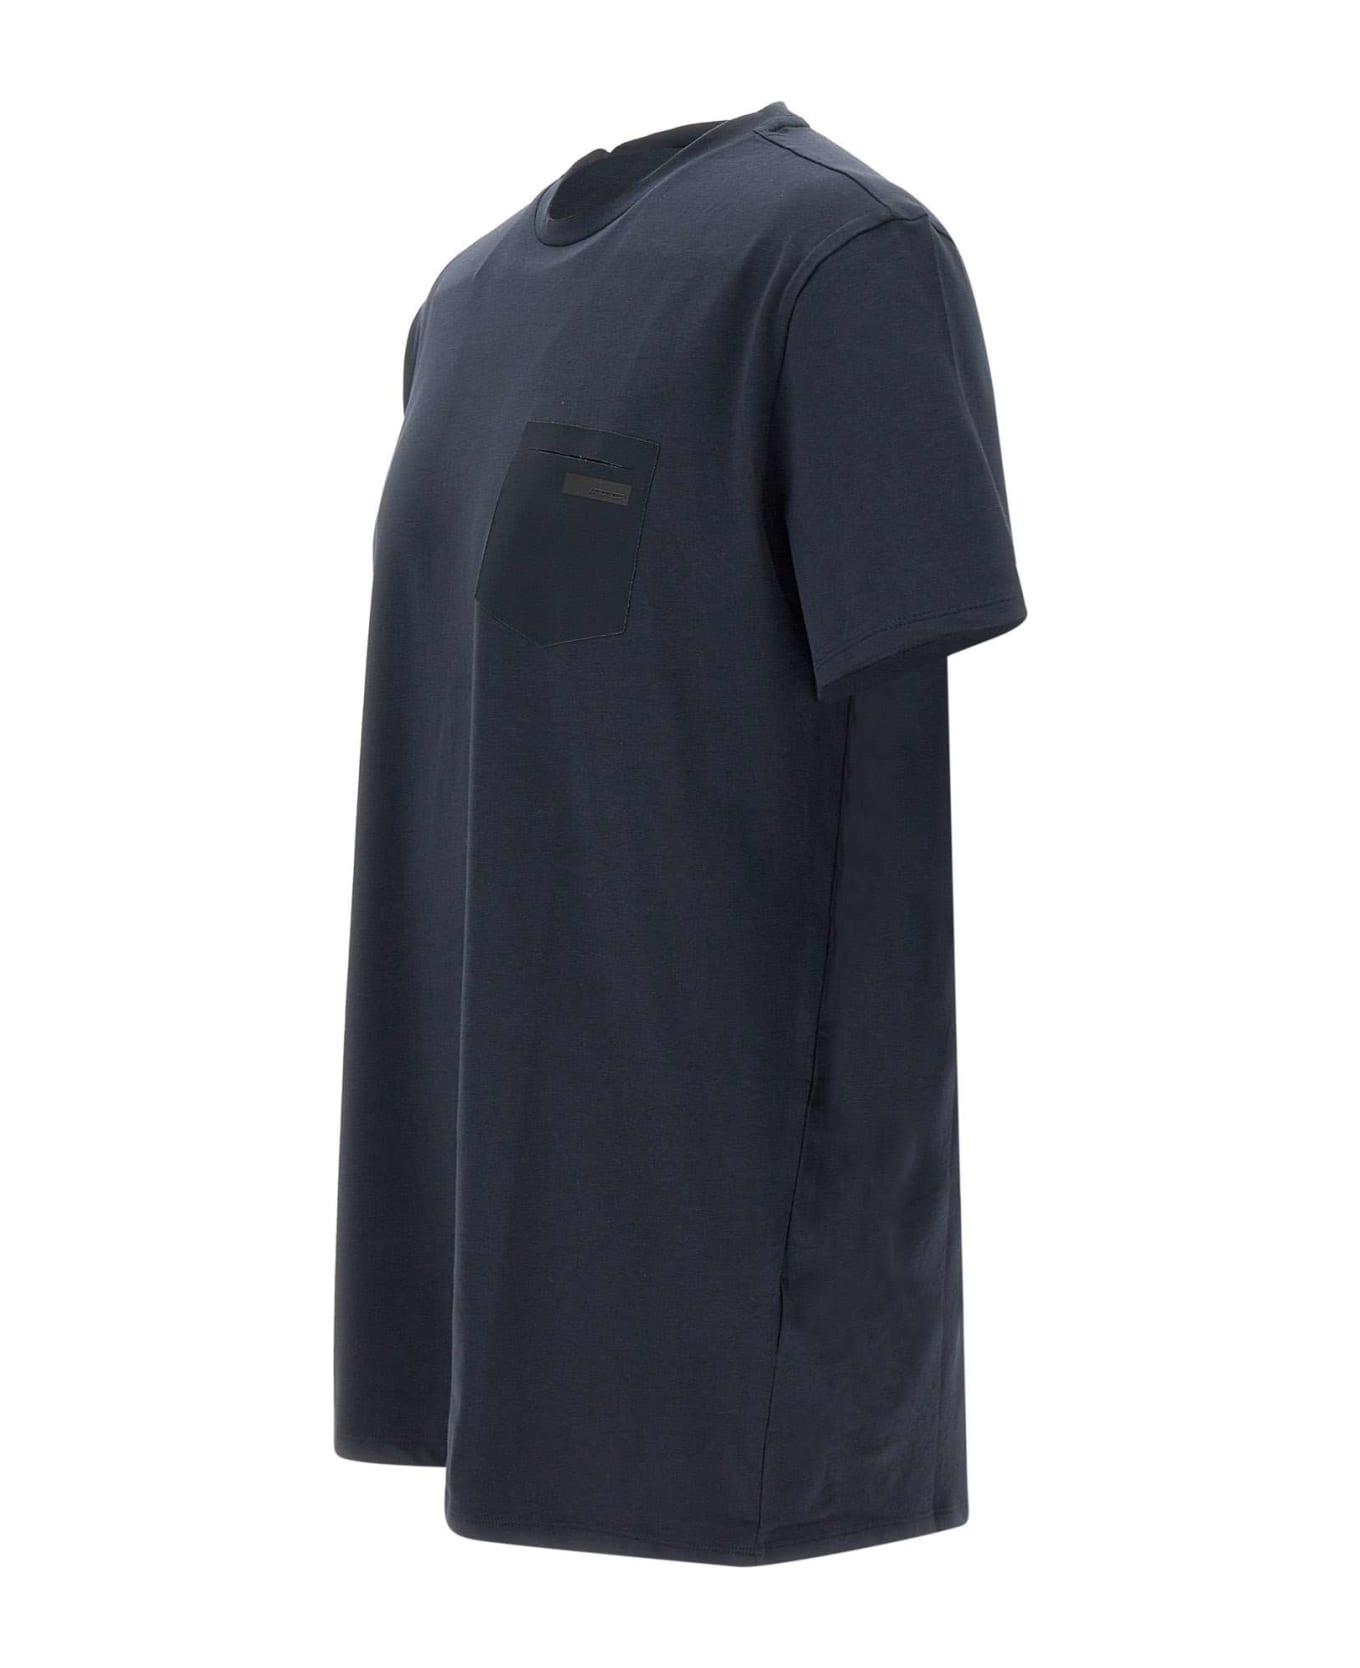 RRD - Roberto Ricci Design 'revo Shirty' T-shirt - Blue Black シャツ